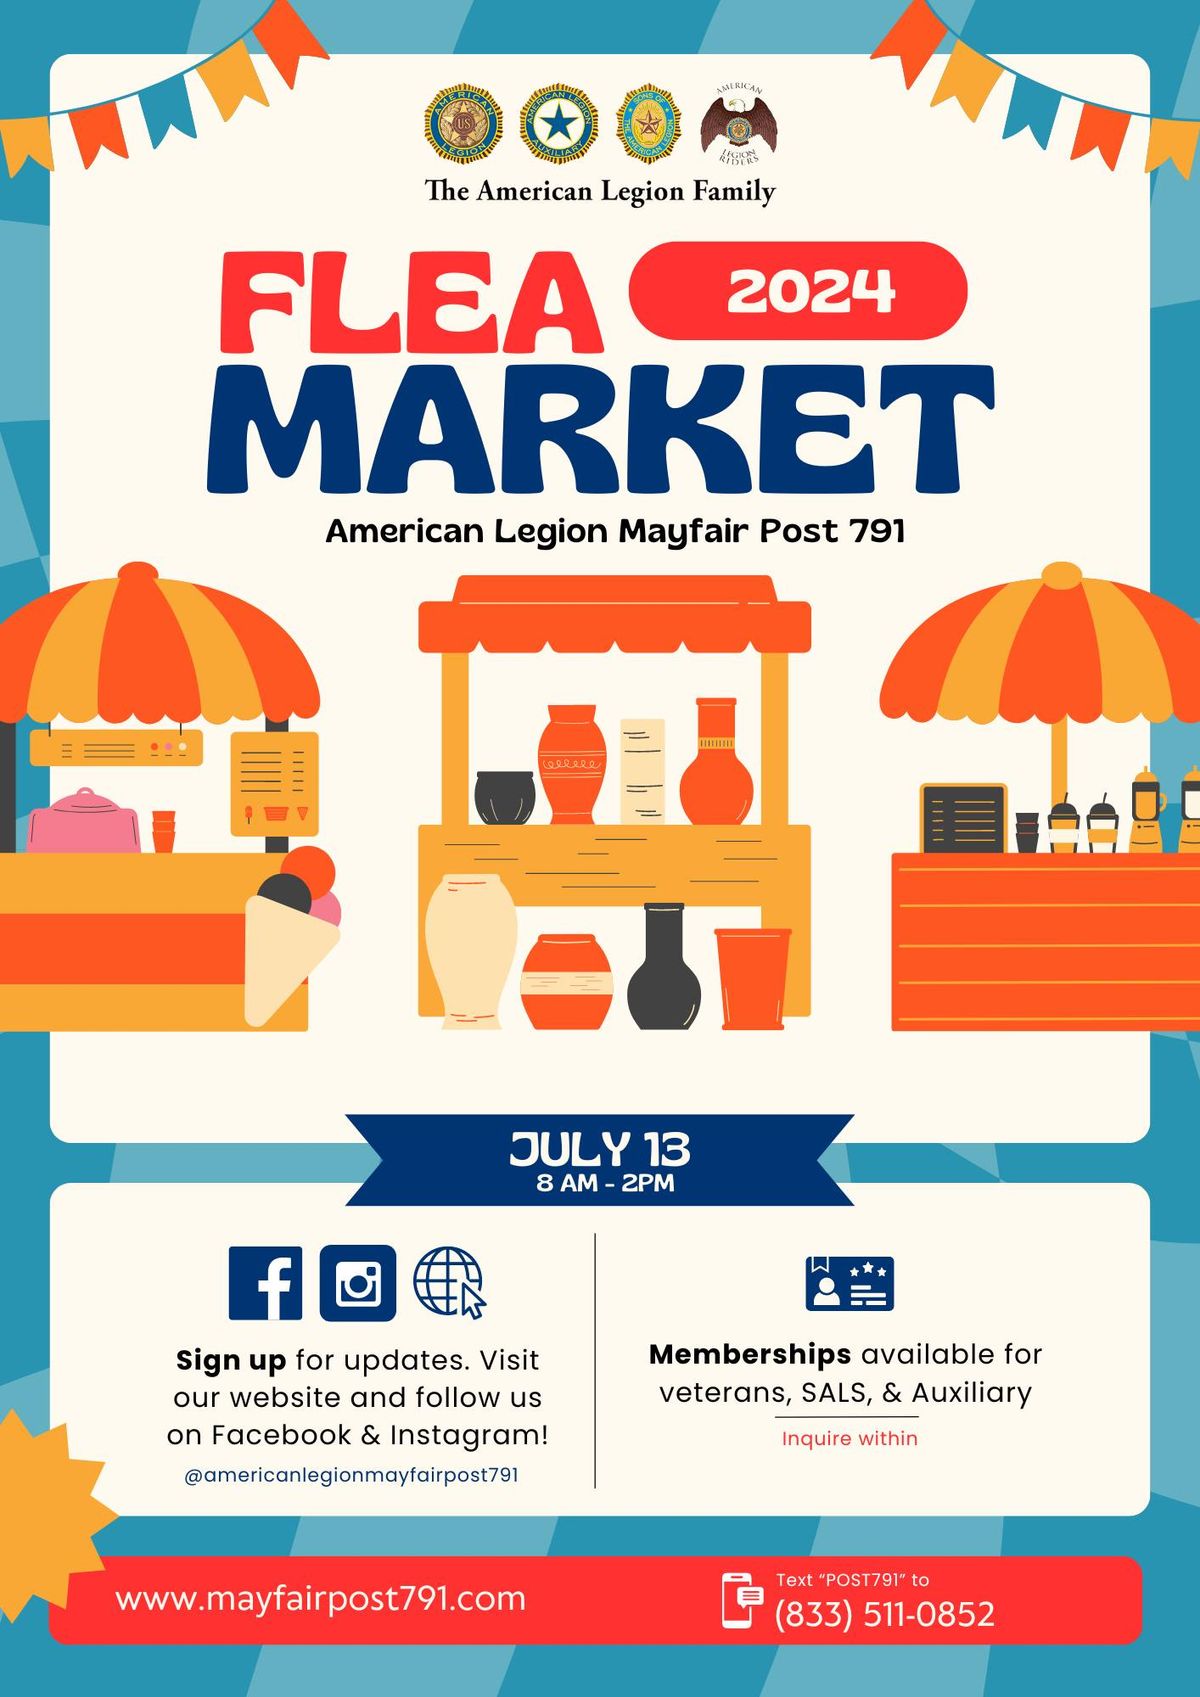 Mayfair Post 791 Flea Market 2024